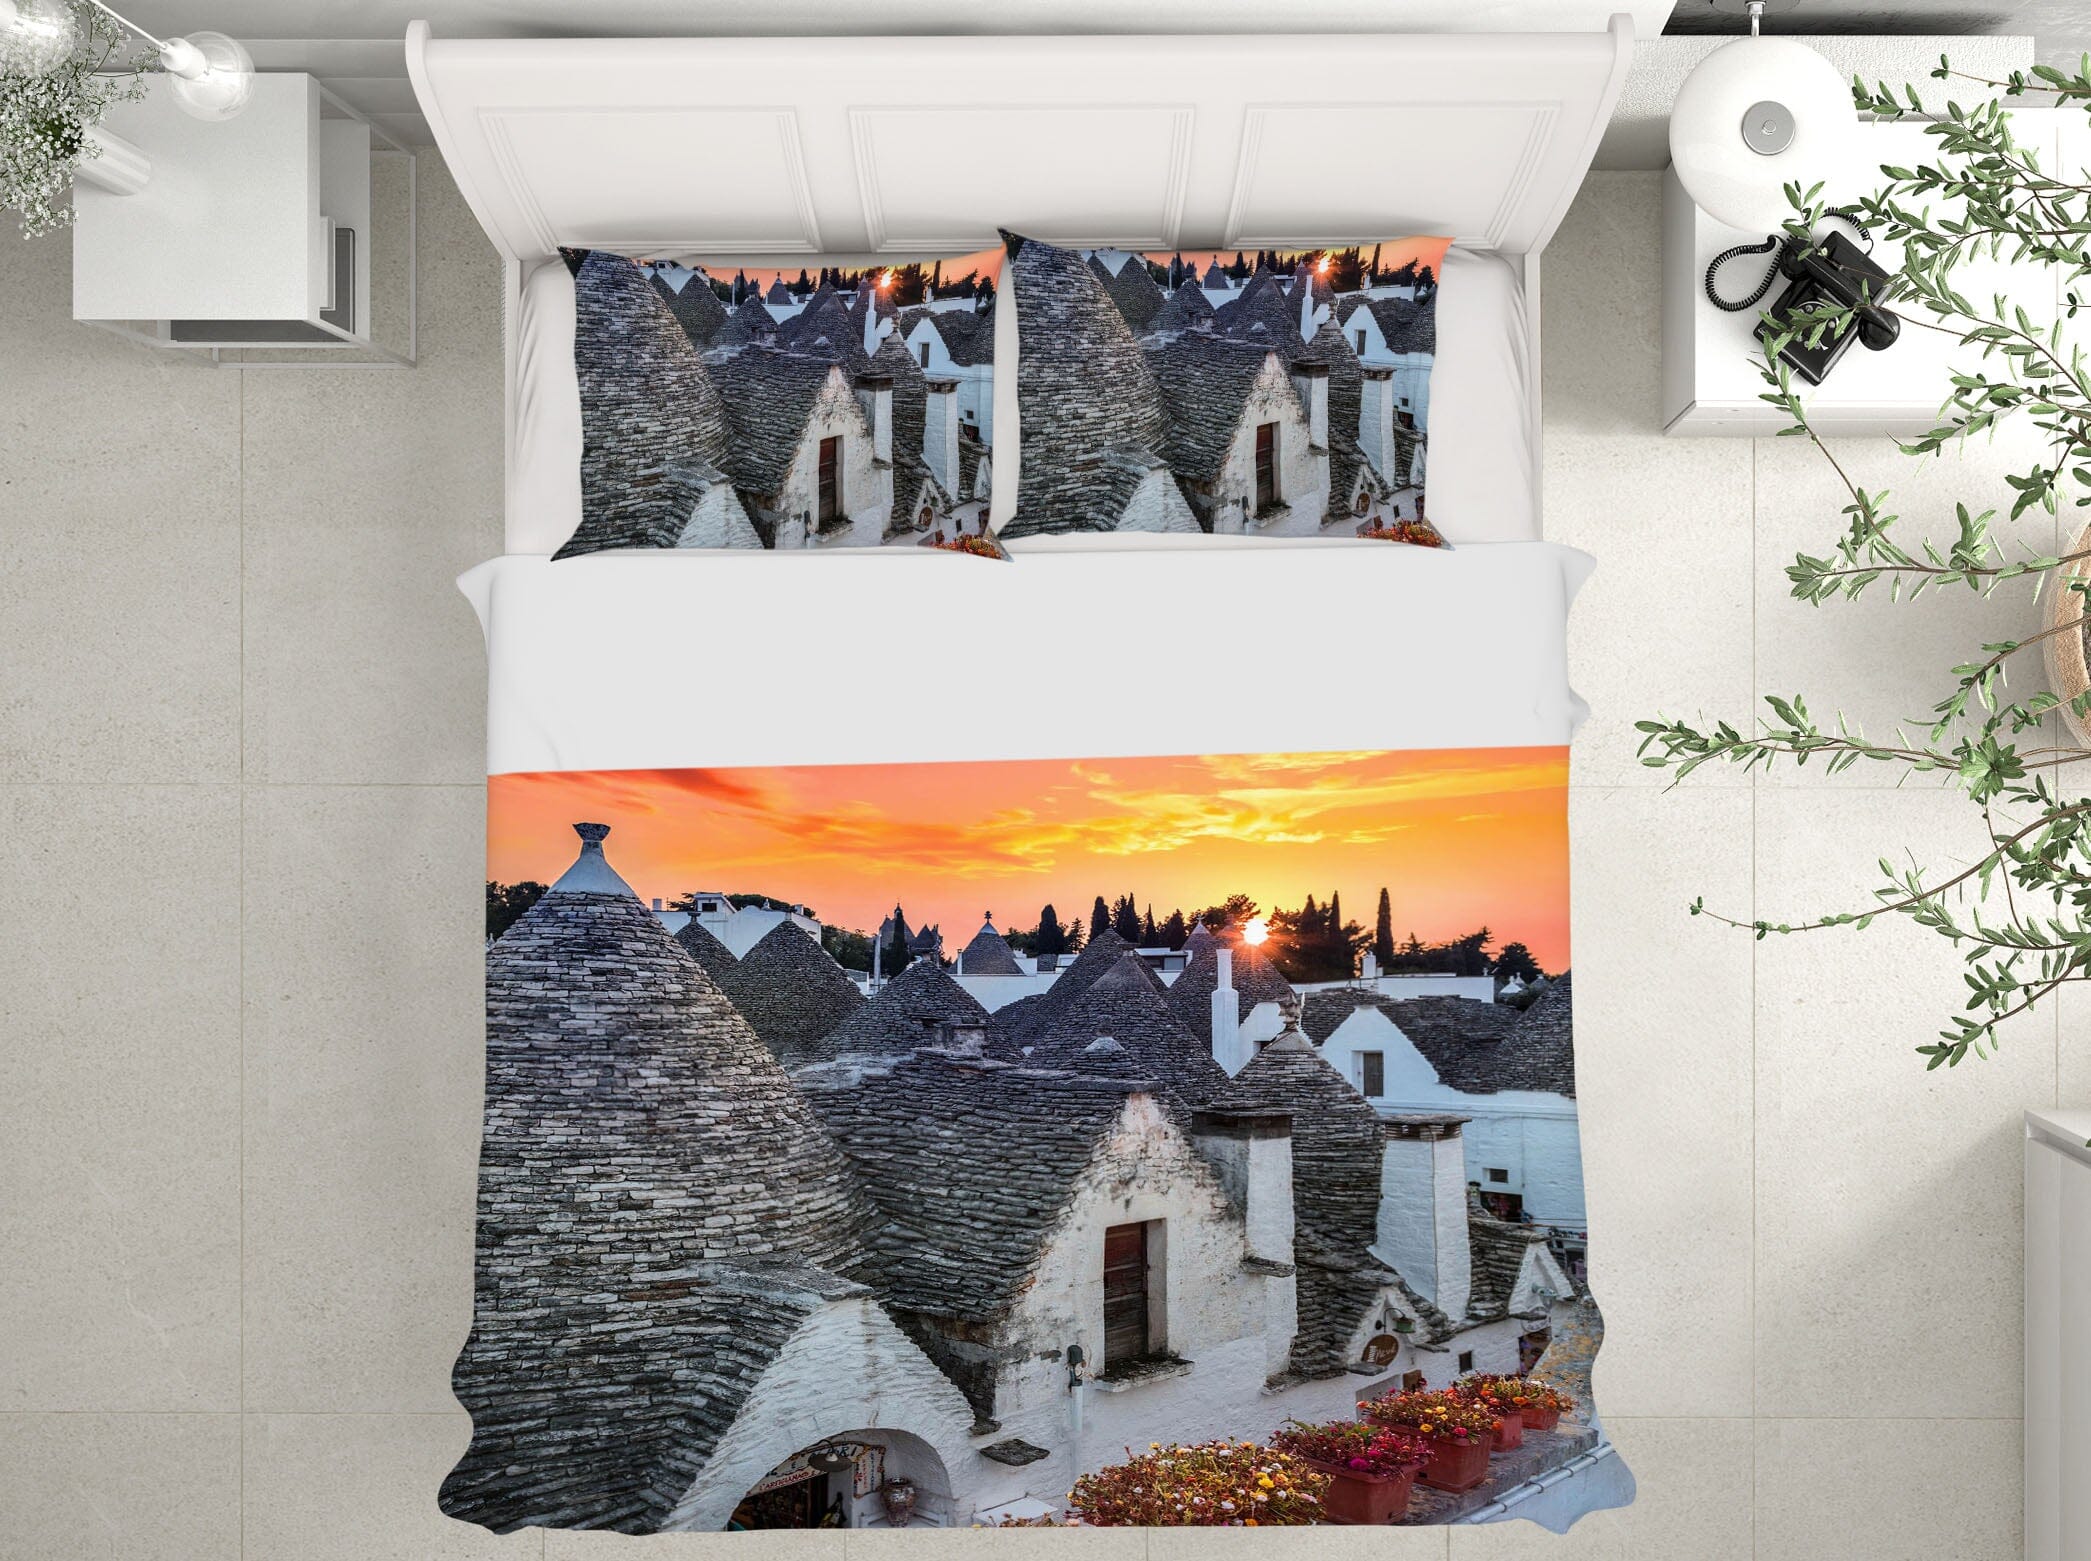 3D Sunrise Village 2101 Marco Carmassi Bedding Bed Pillowcases Quilt Quiet Covers AJ Creativity Home 